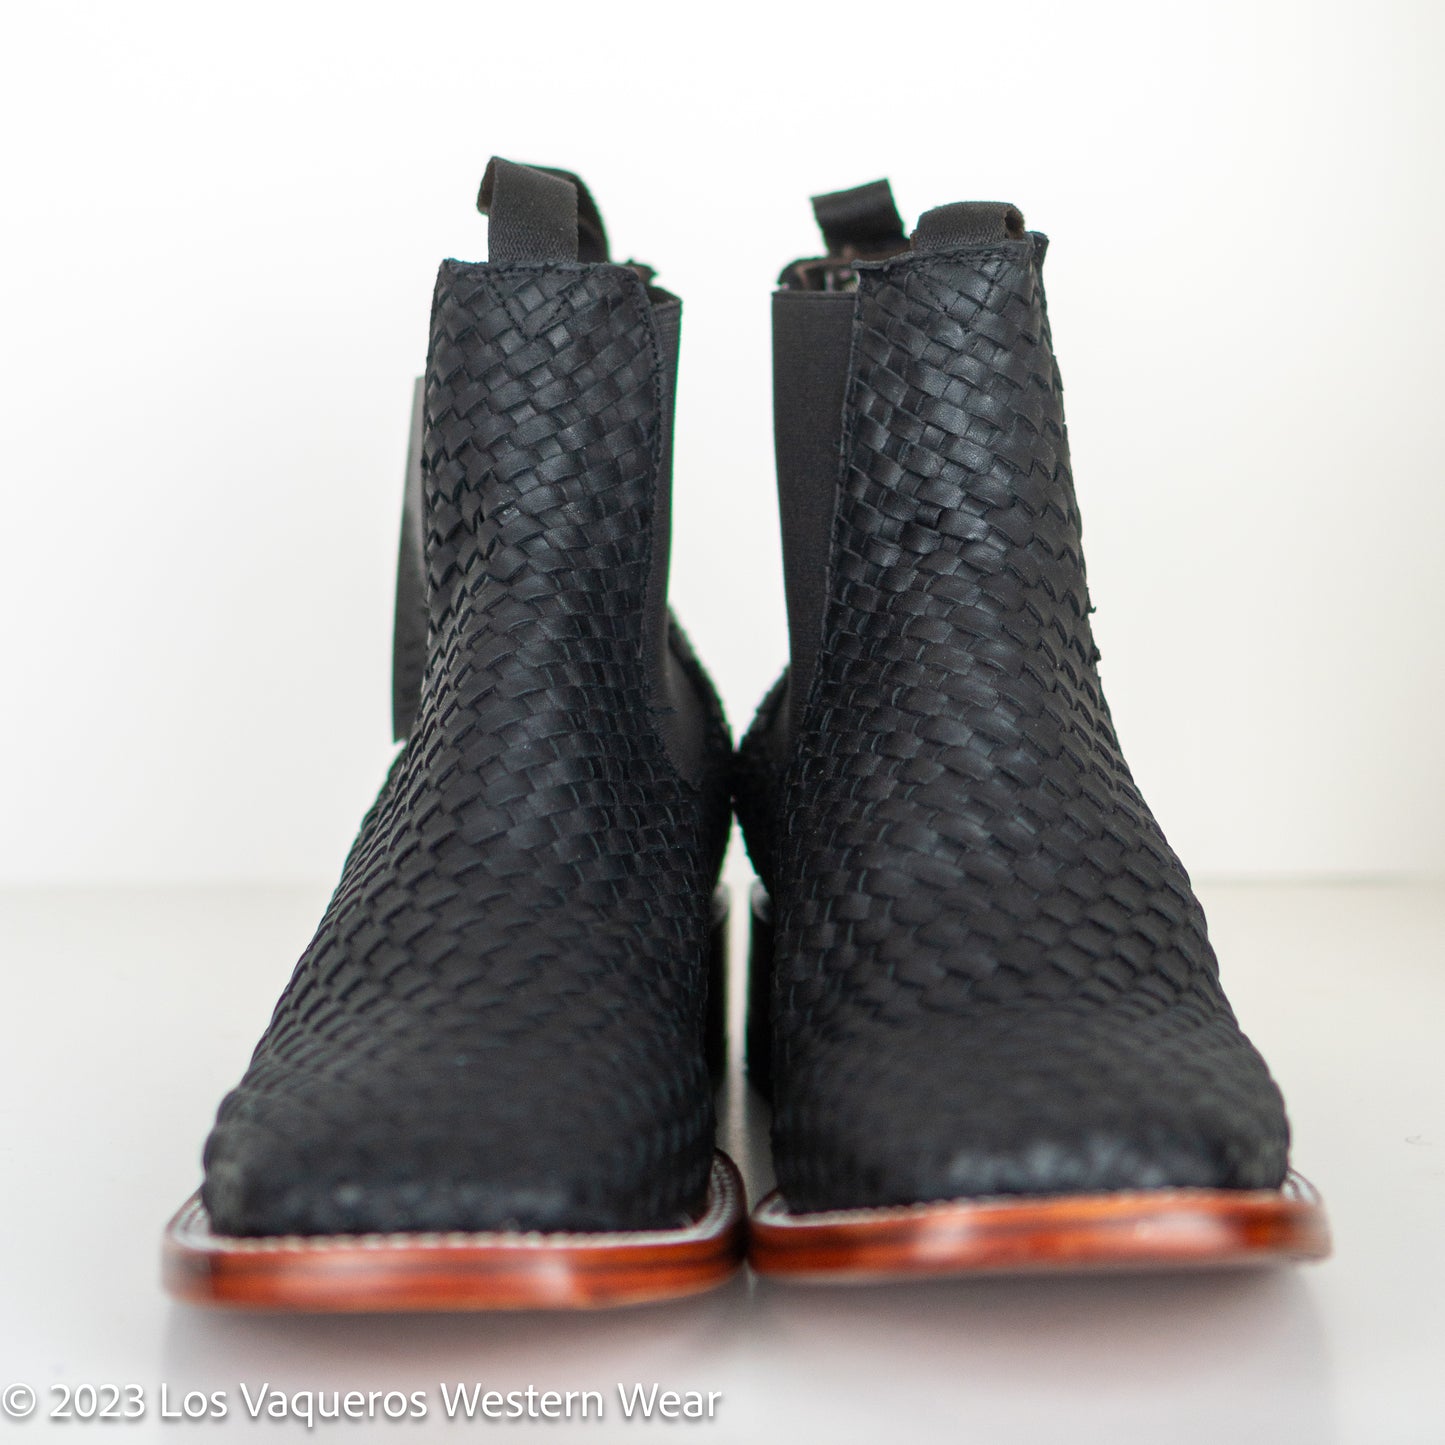 Calzatti Men's Welt Boots Woven Fabric Leather Black